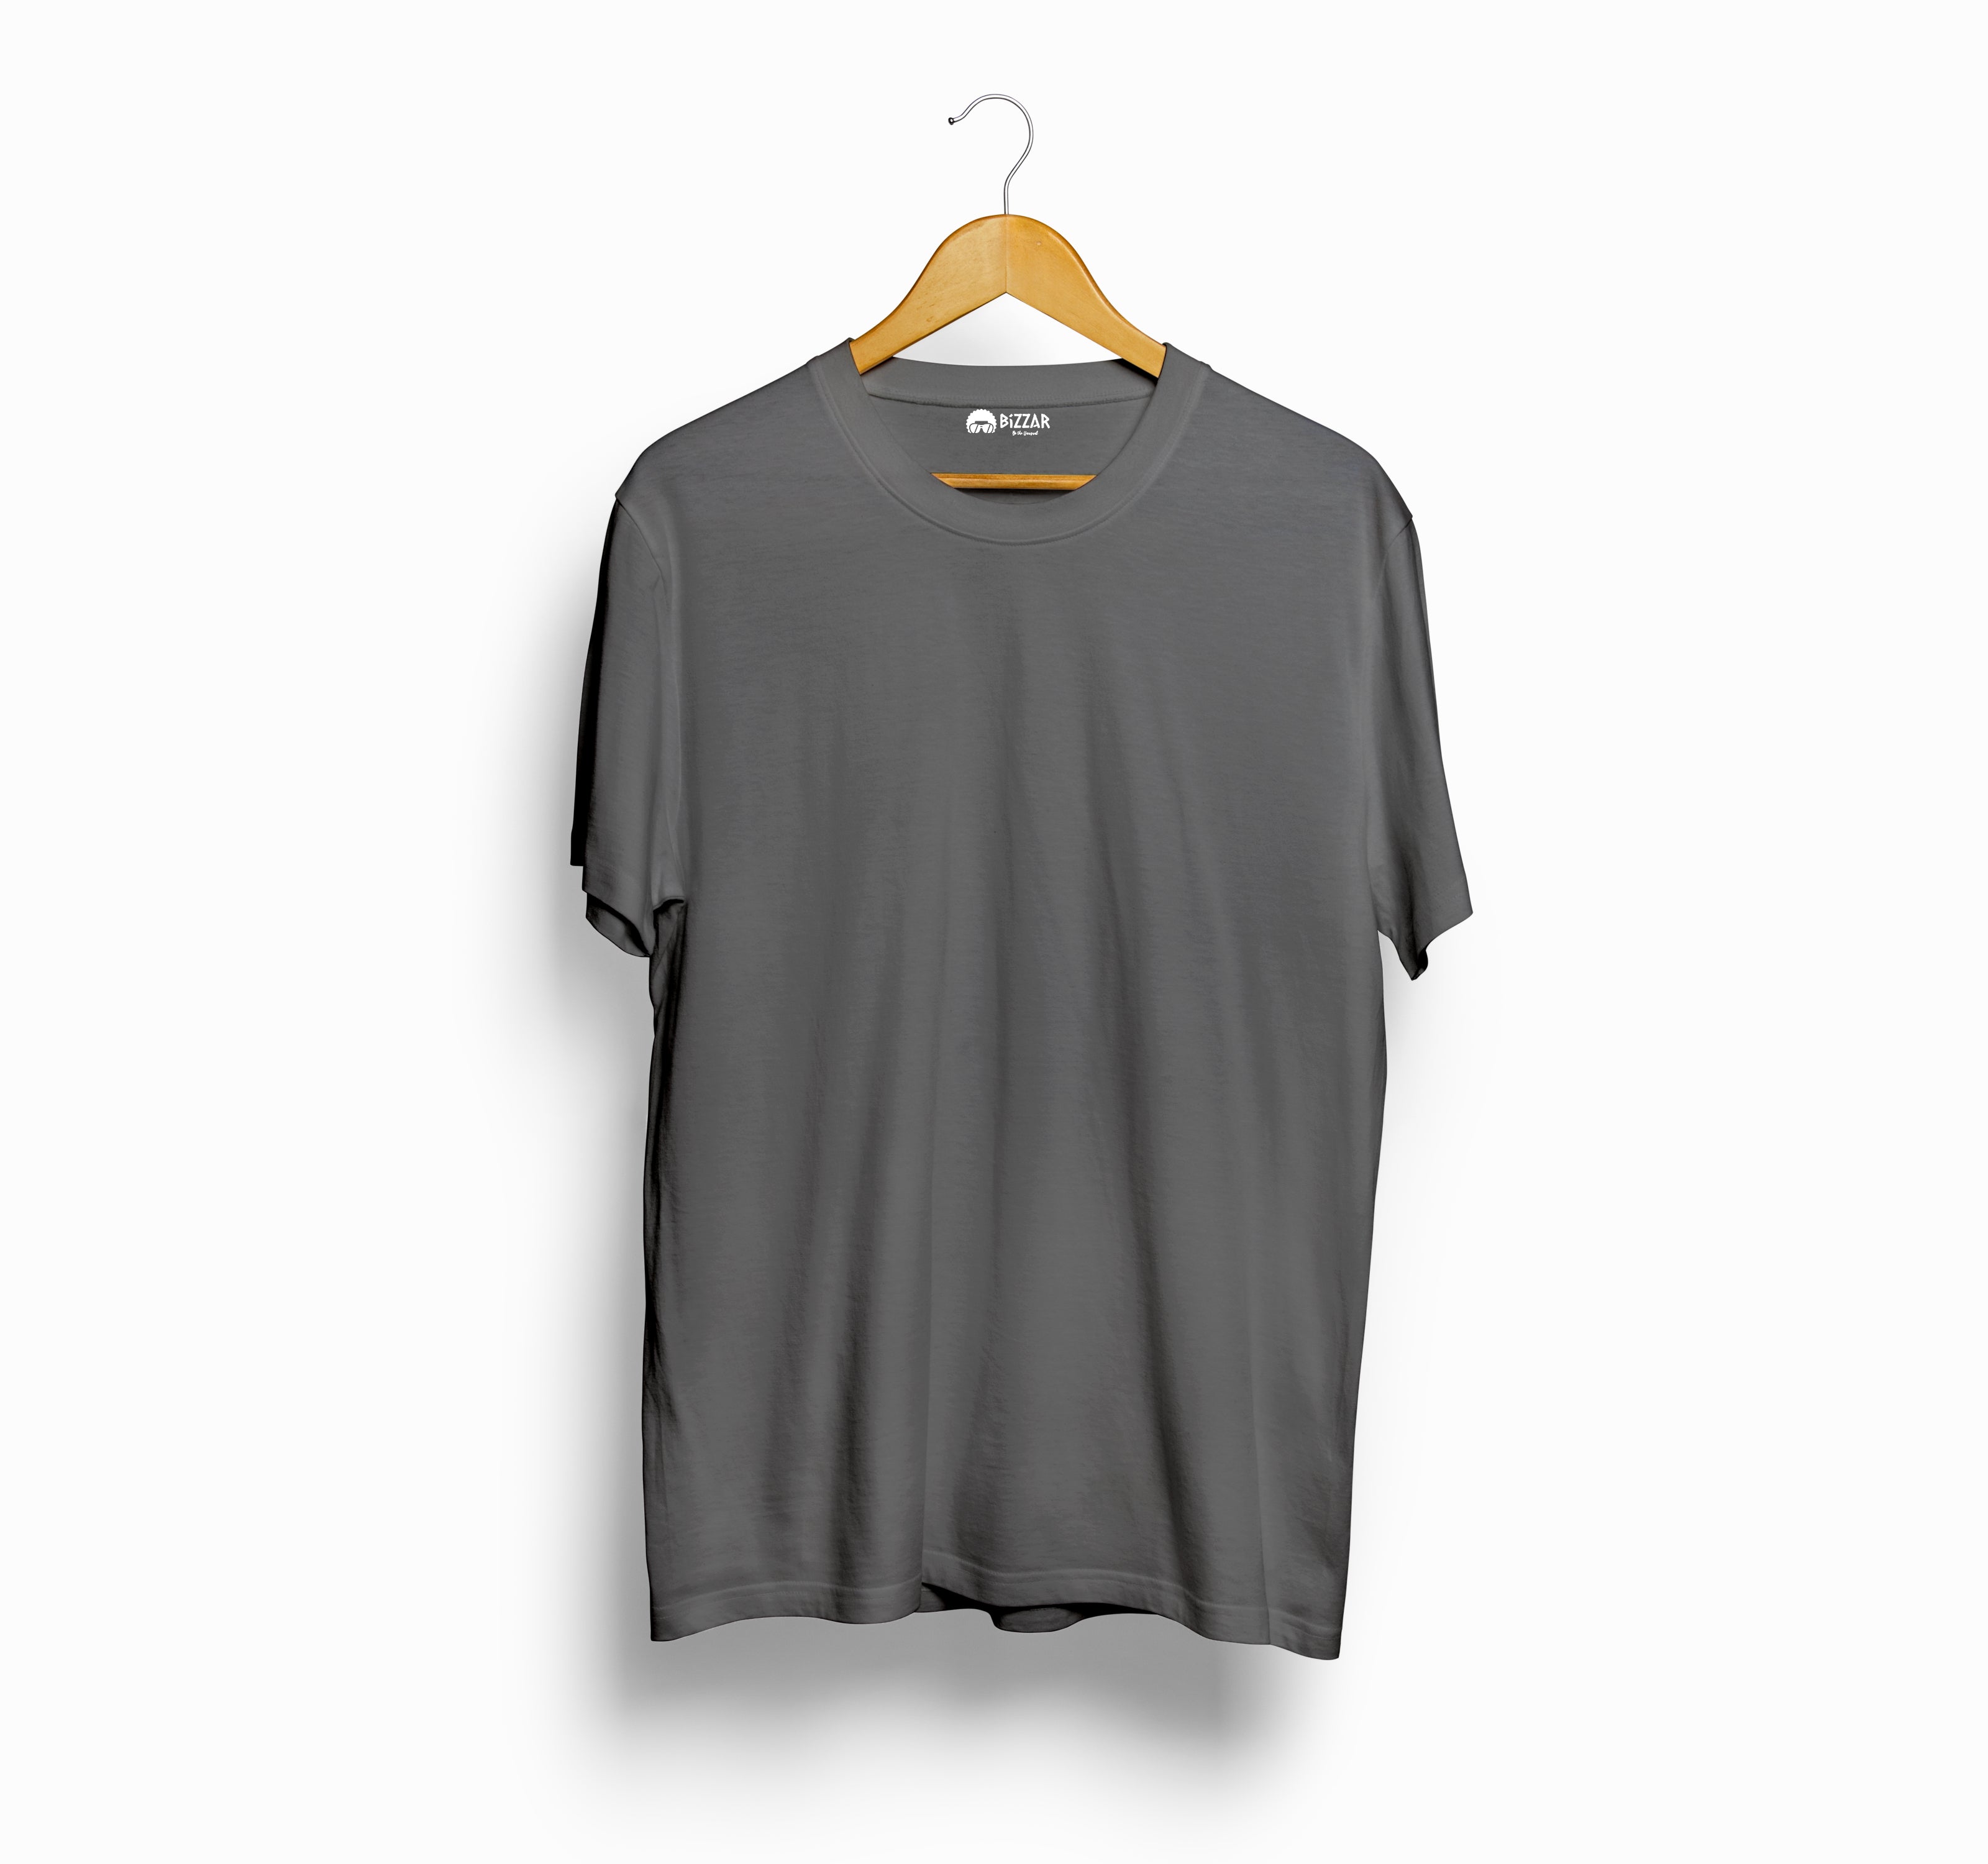 Bizzar's Charcoal Melange T-Shirt